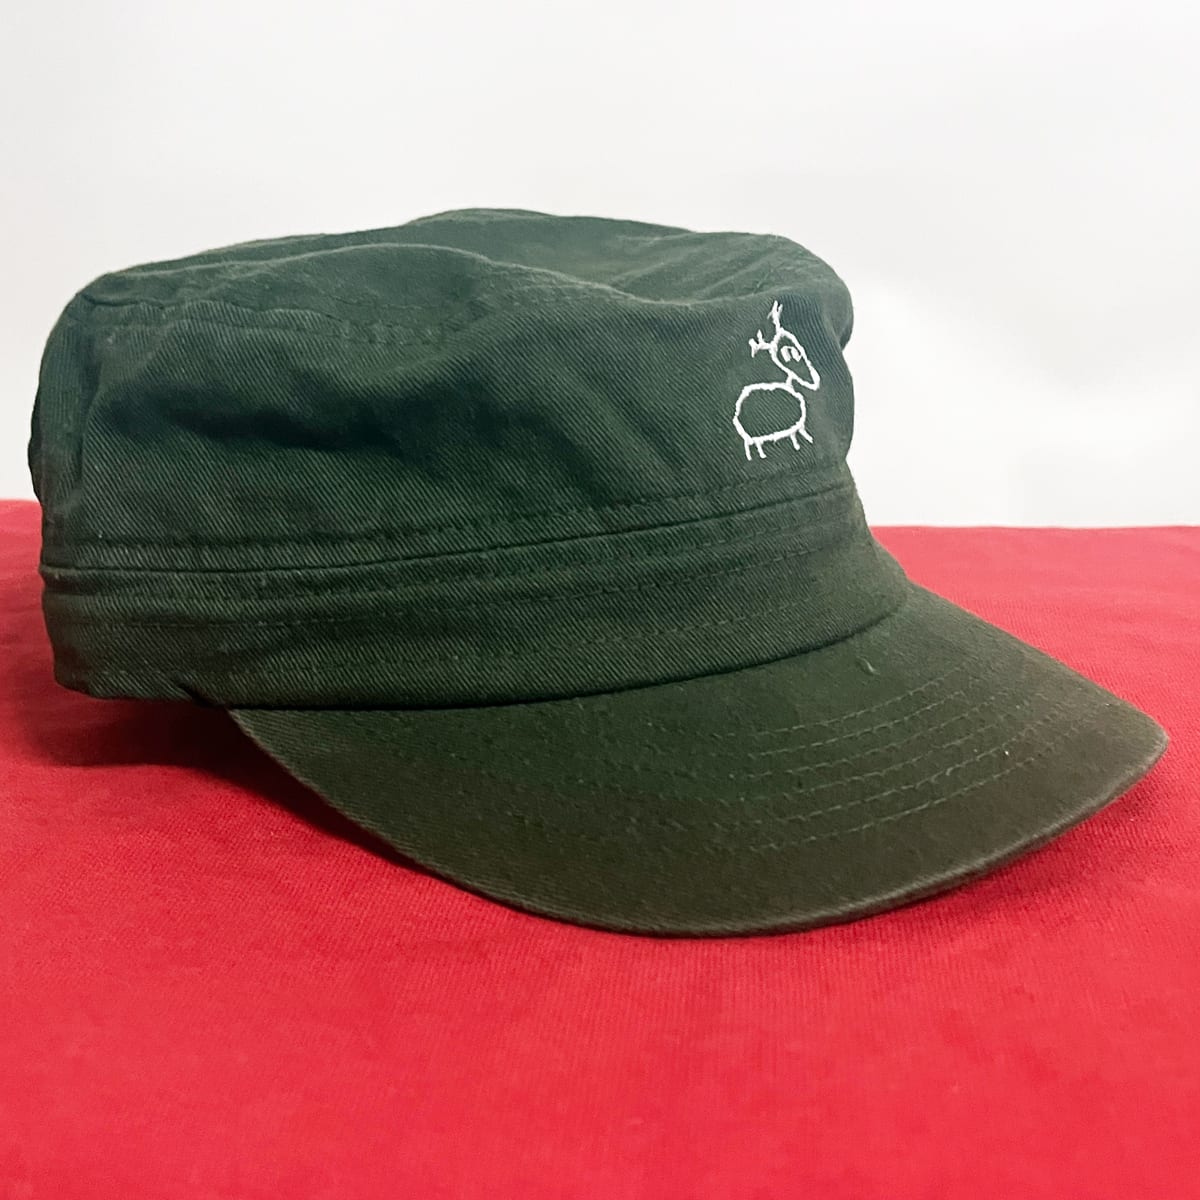 Dark khaki army cap